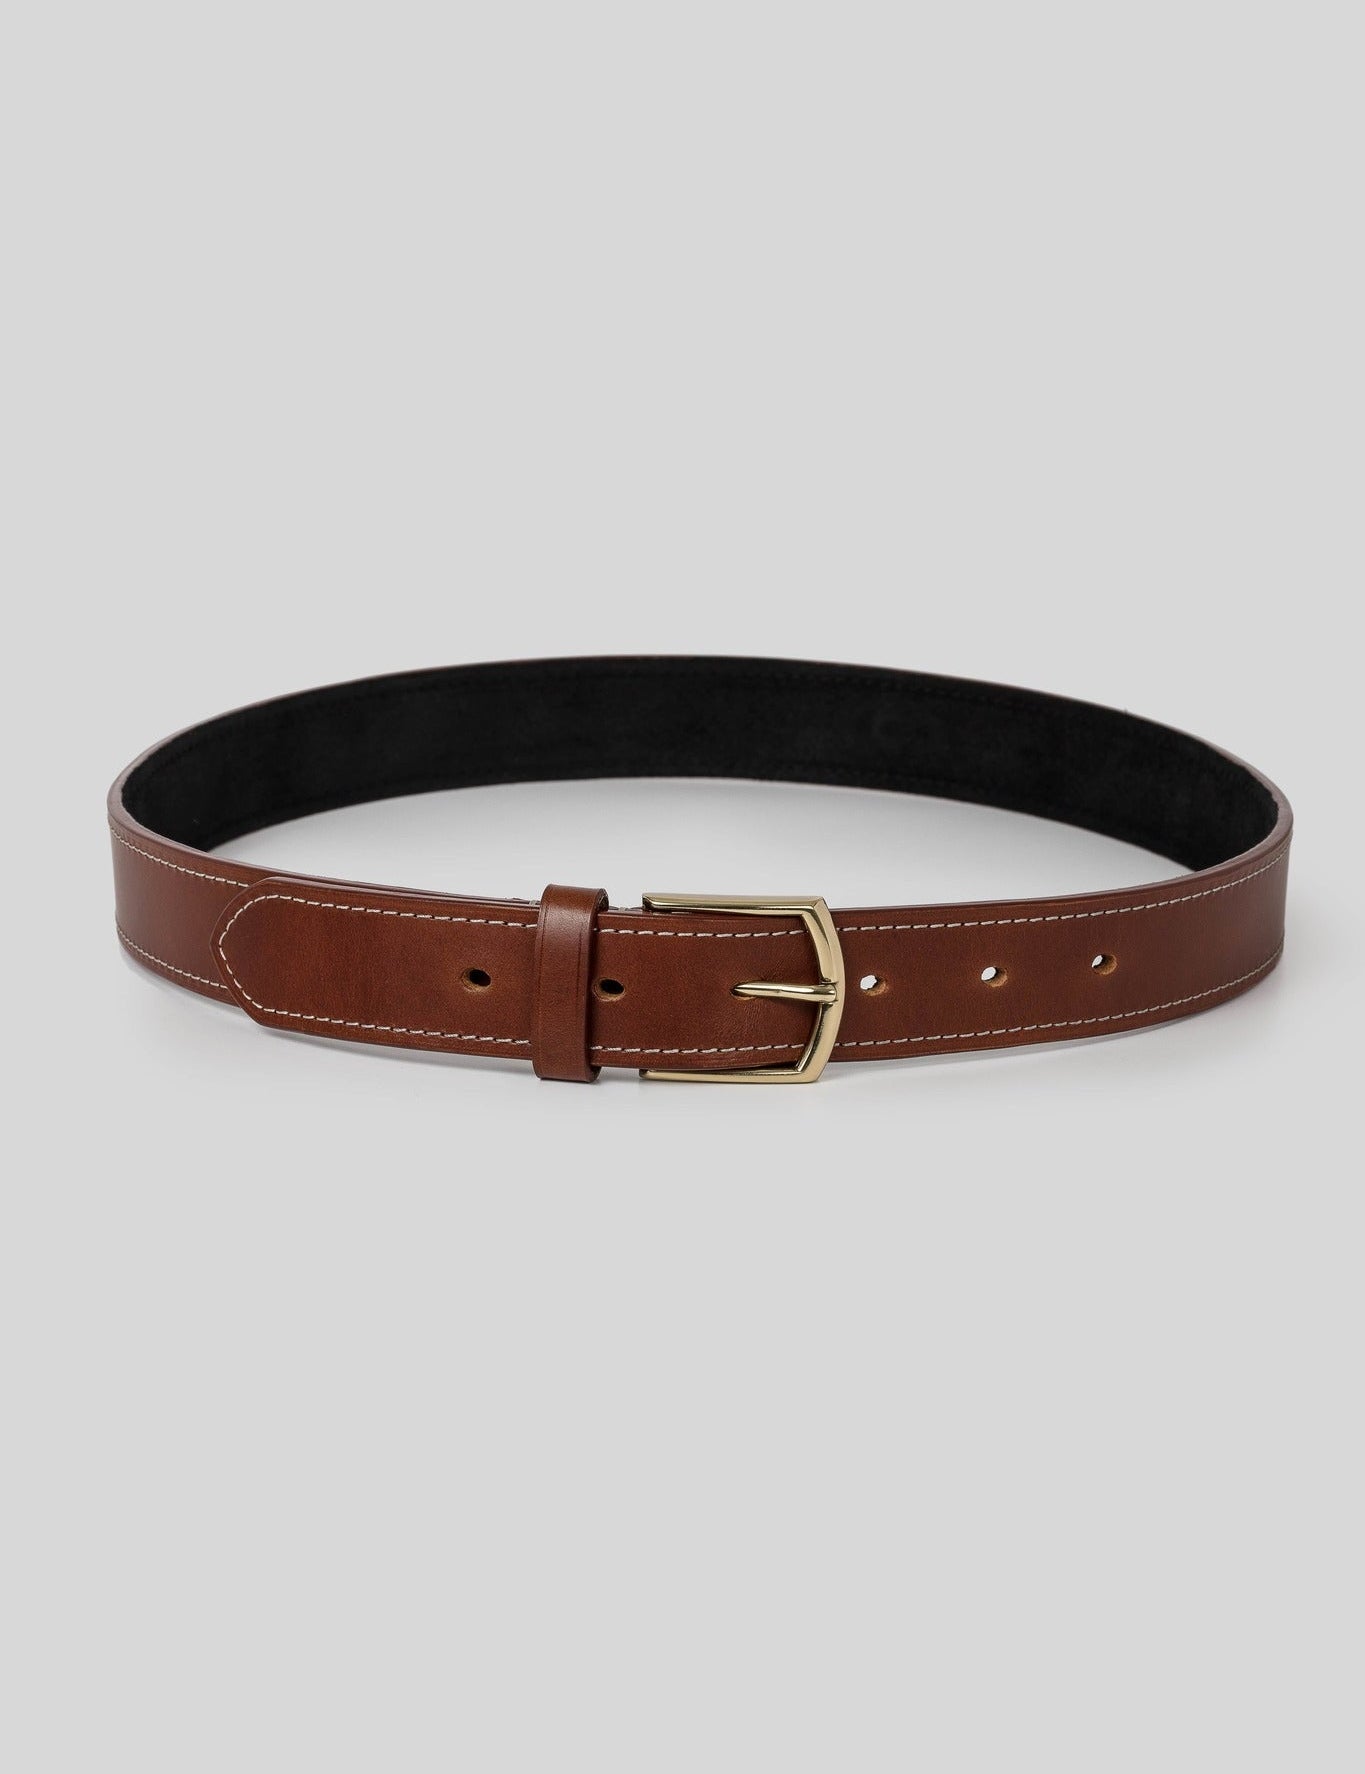 mens-luxury-leather-belt-detailed_1e94b498-430b-4f3f-98ac-518205838ec2.jpg